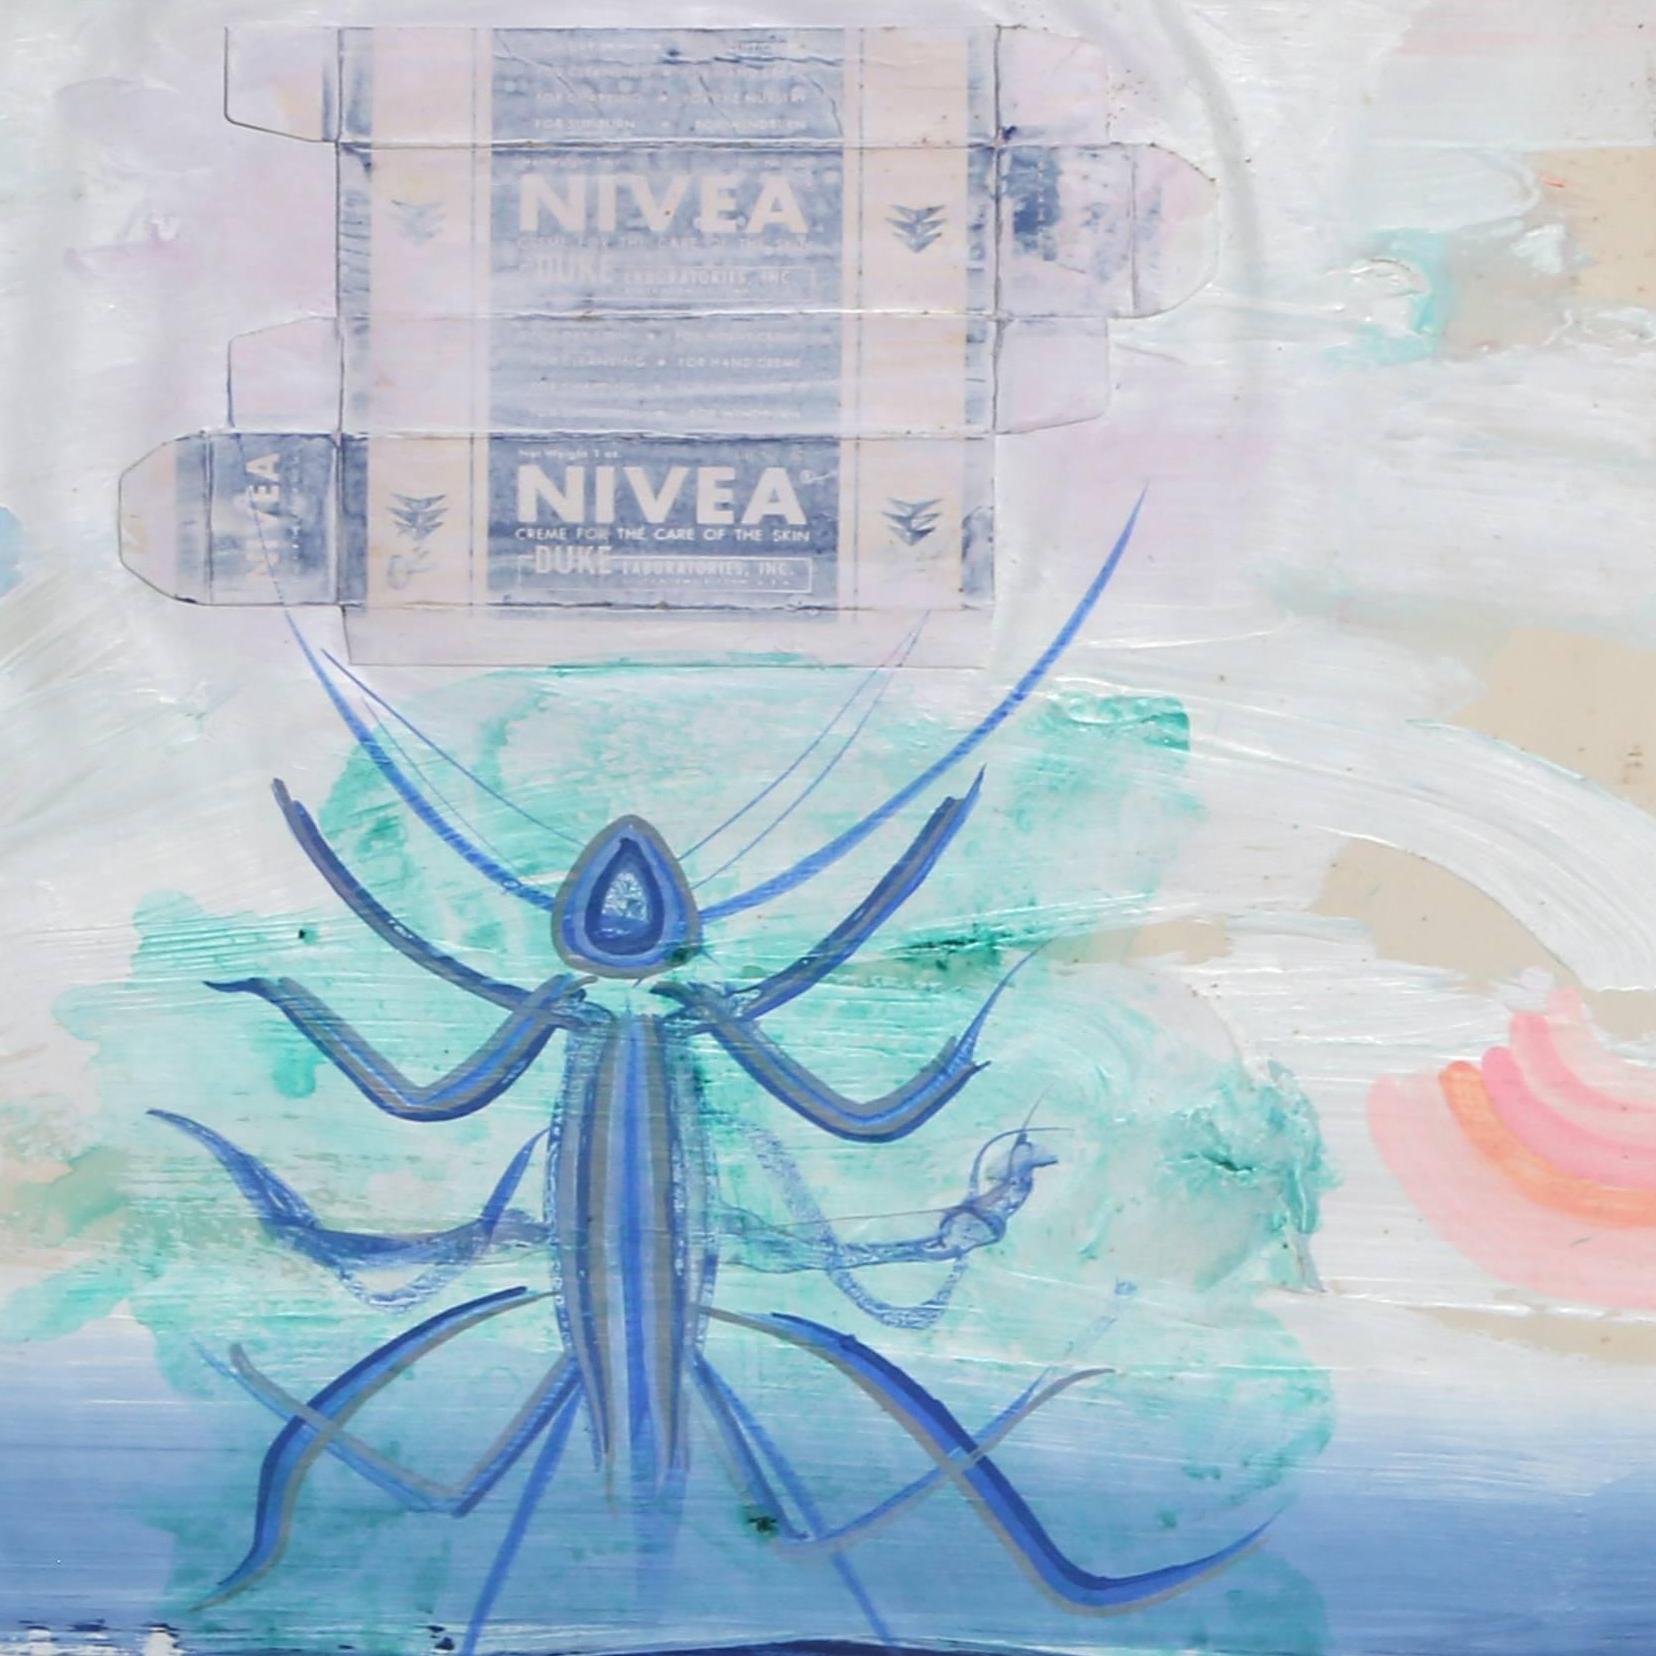 Nivea and Insects, 1966, Mixed Media Collage by Josep Grau Garriga - Conceptual Mixed Media Art by Josep Grau-Garriga